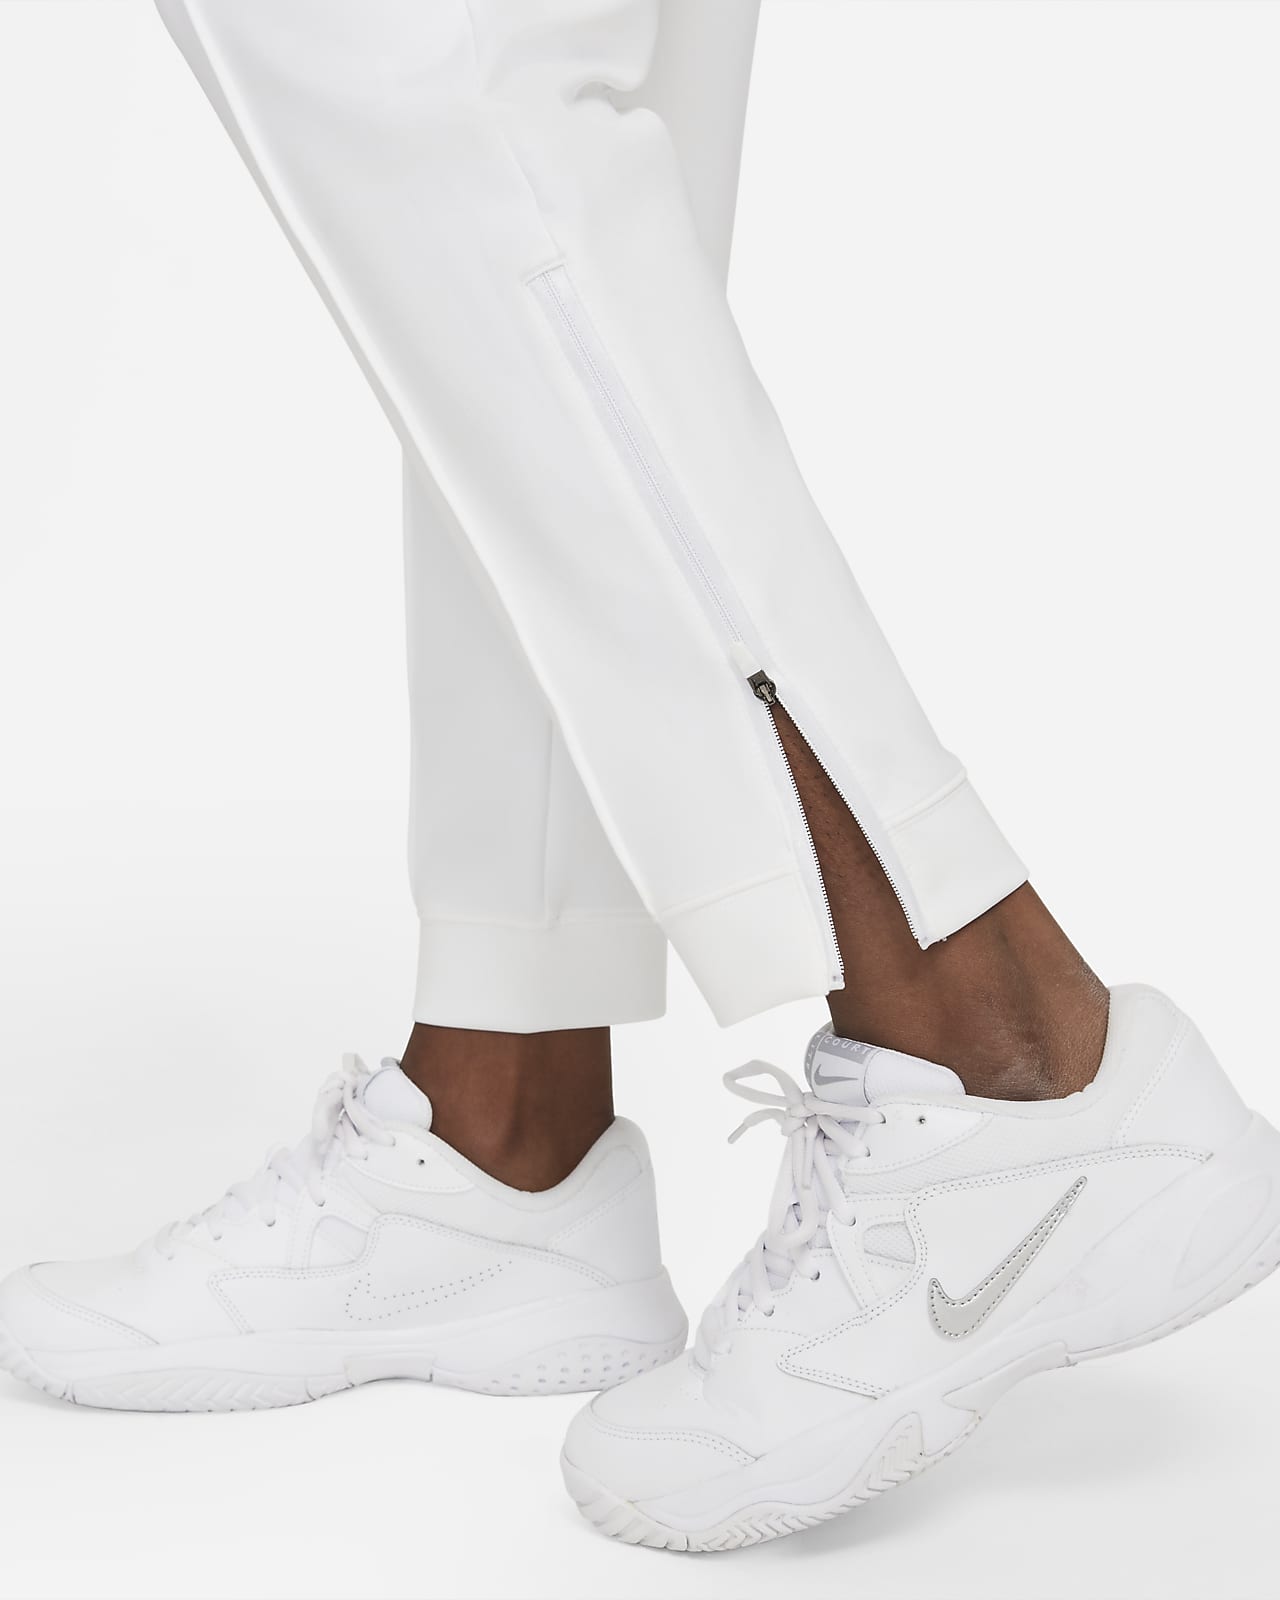 Girls' trousers Nike Court Club Pants - polar/polar/white, Tennis Zone